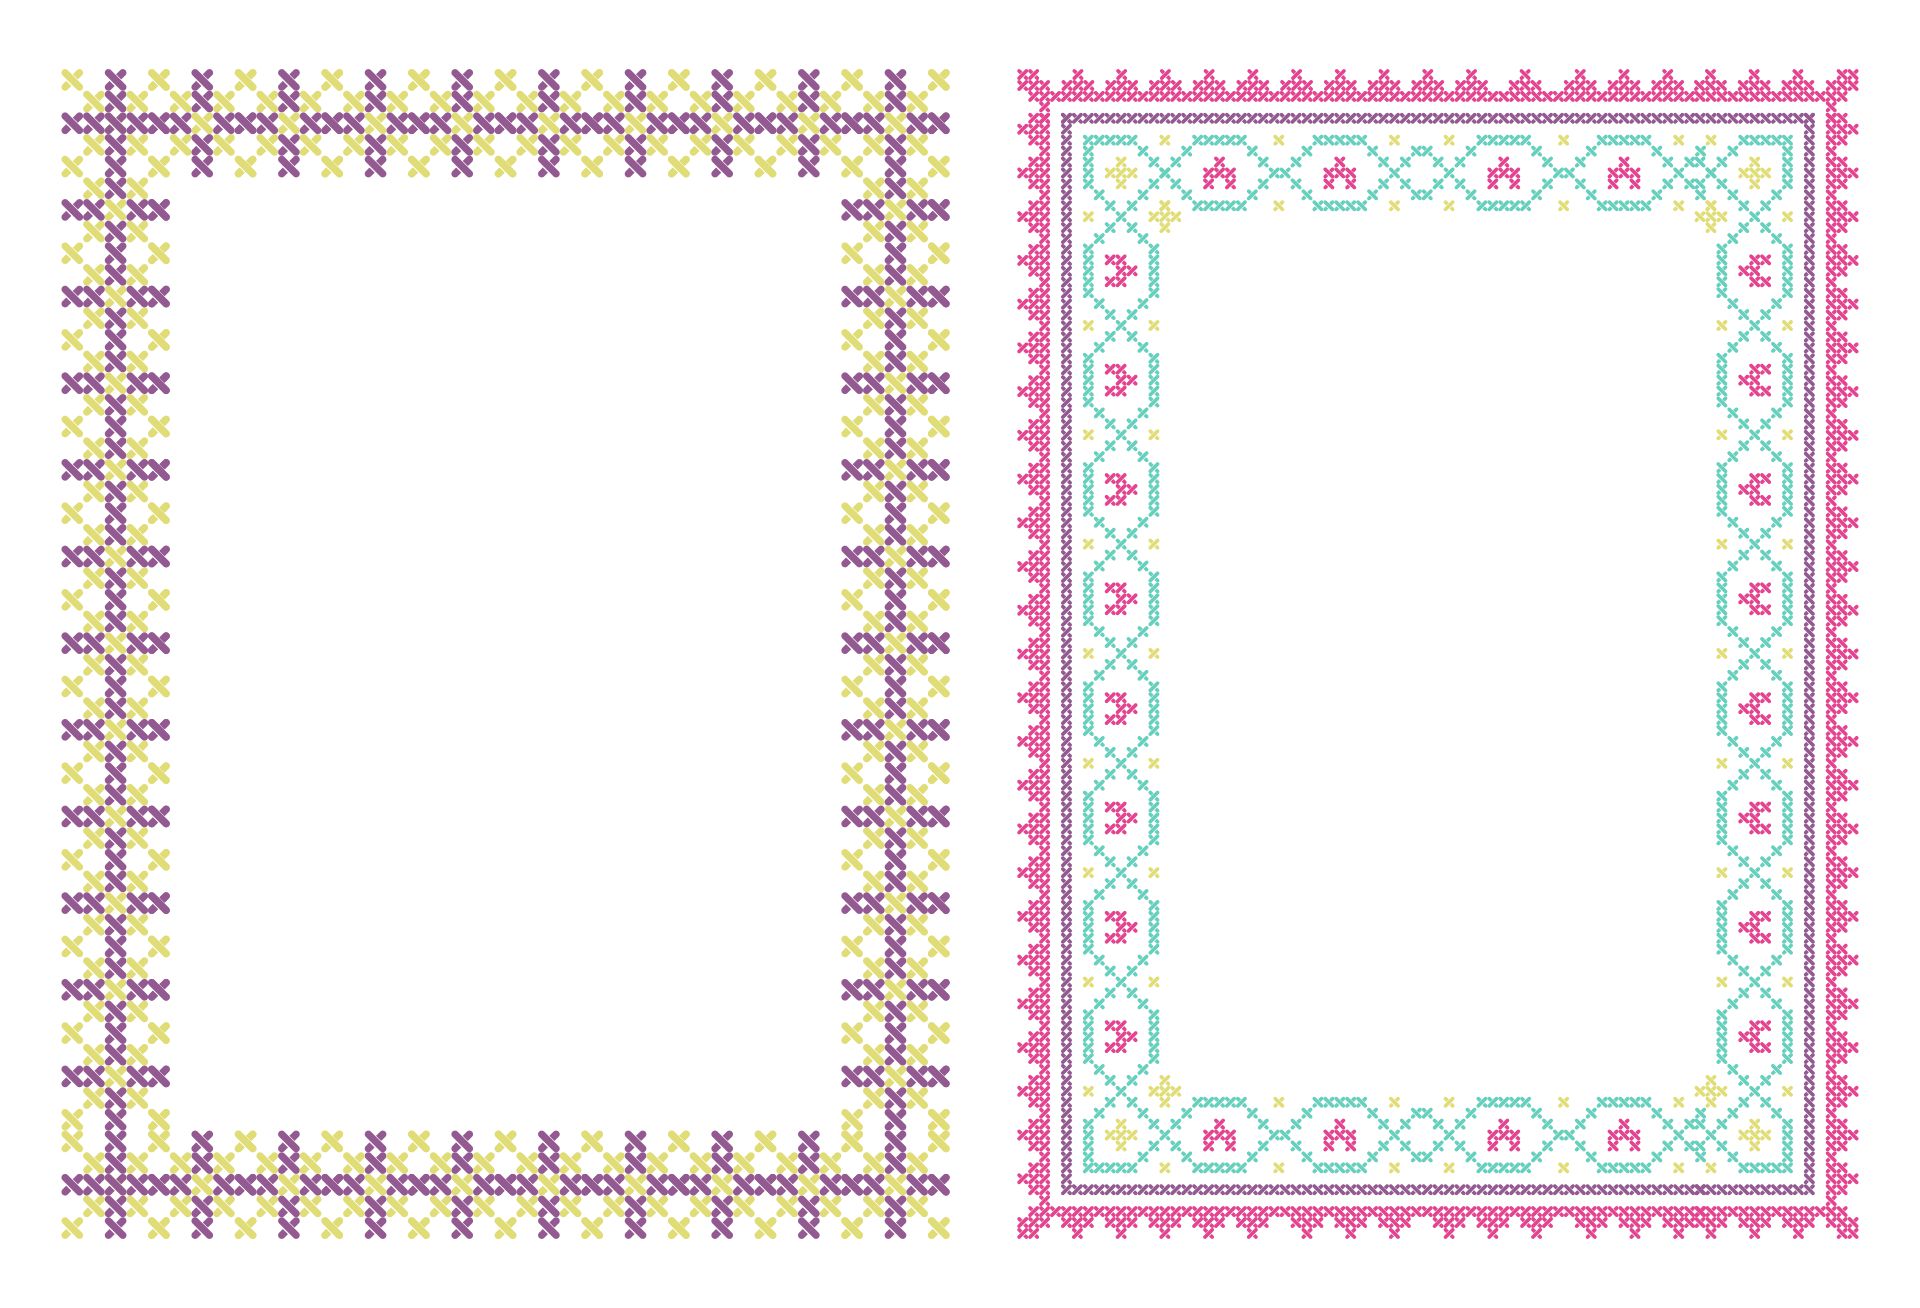 Counted Cross Stitch Border Patterns